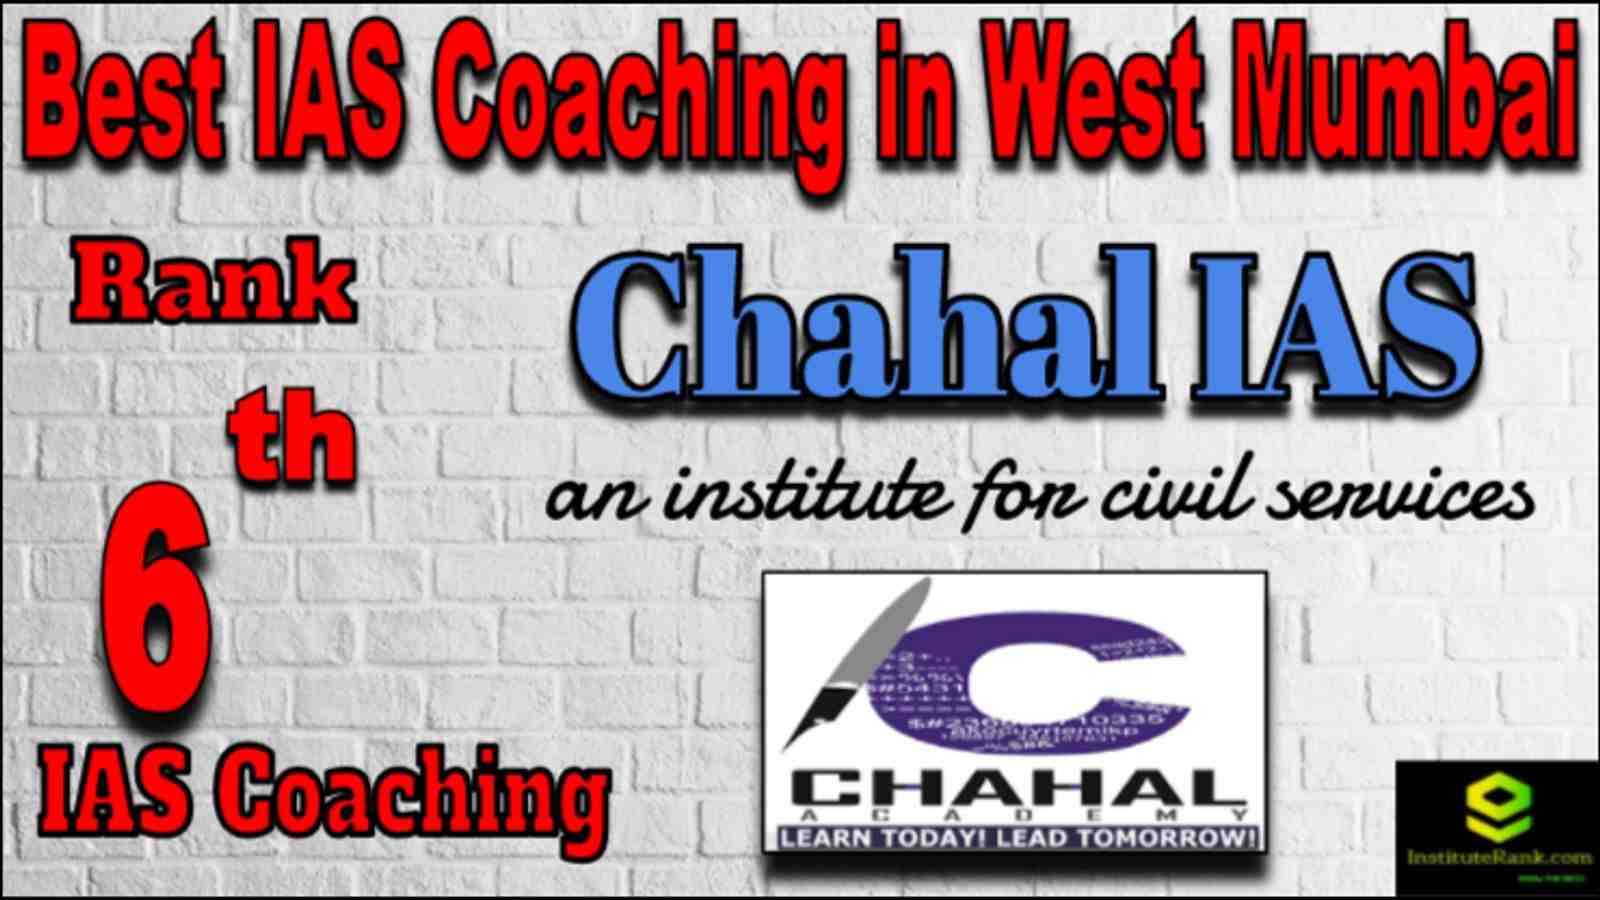 Rank 6 Best IAS Coaching in West Mumbai